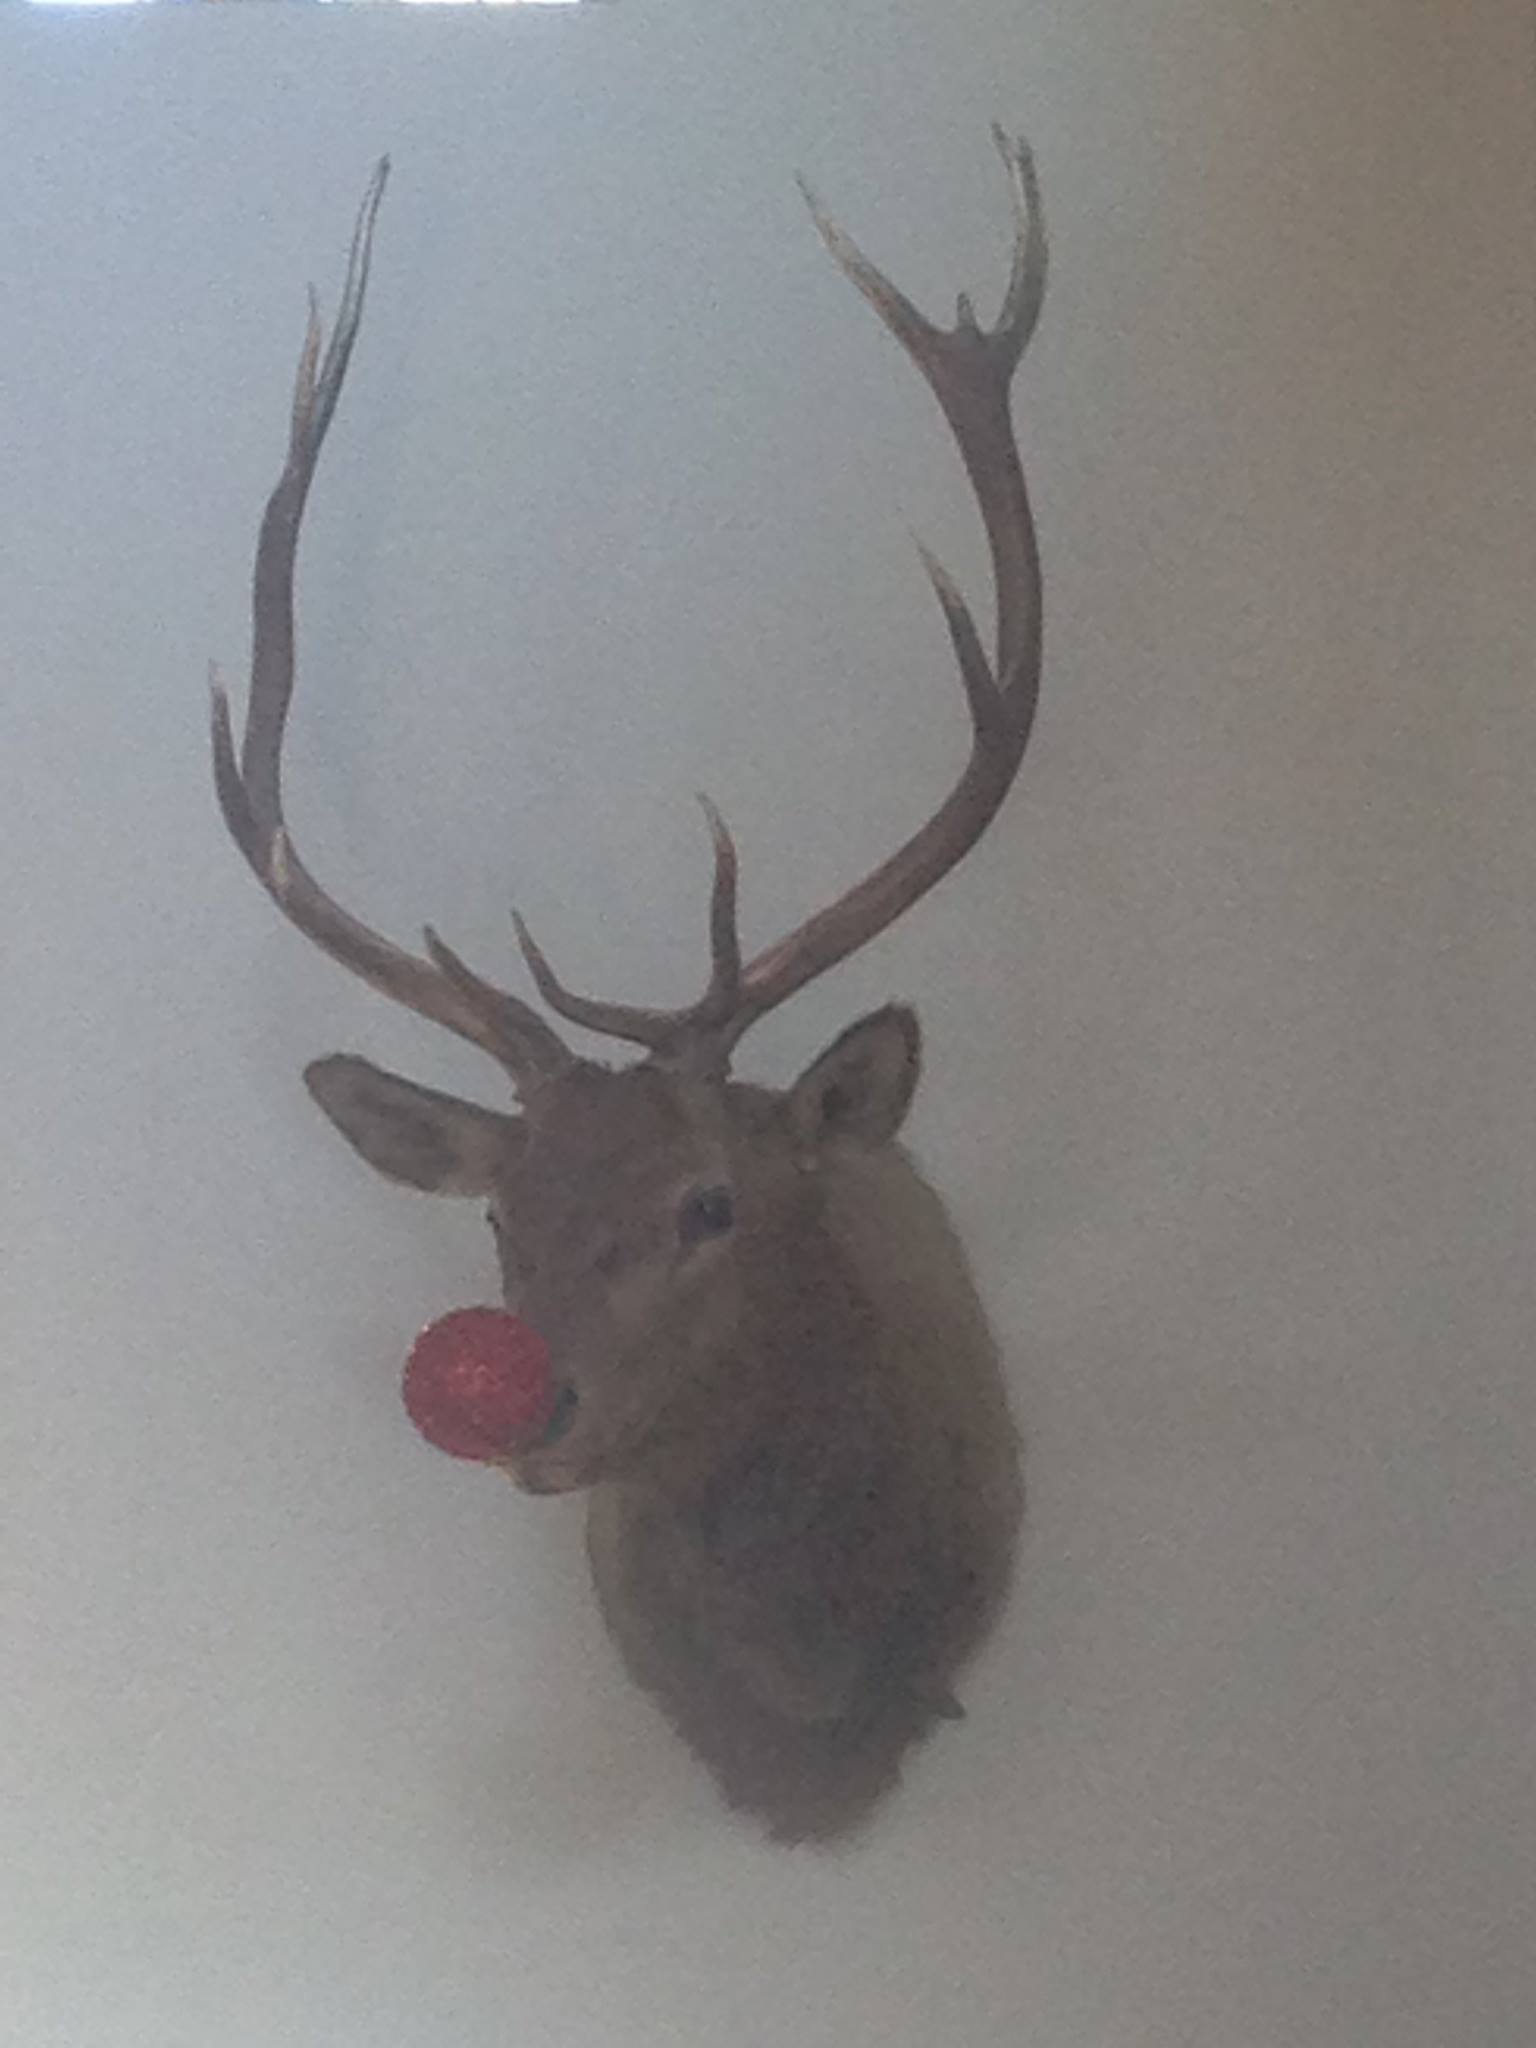 Rudolf the red nosed reindeer.